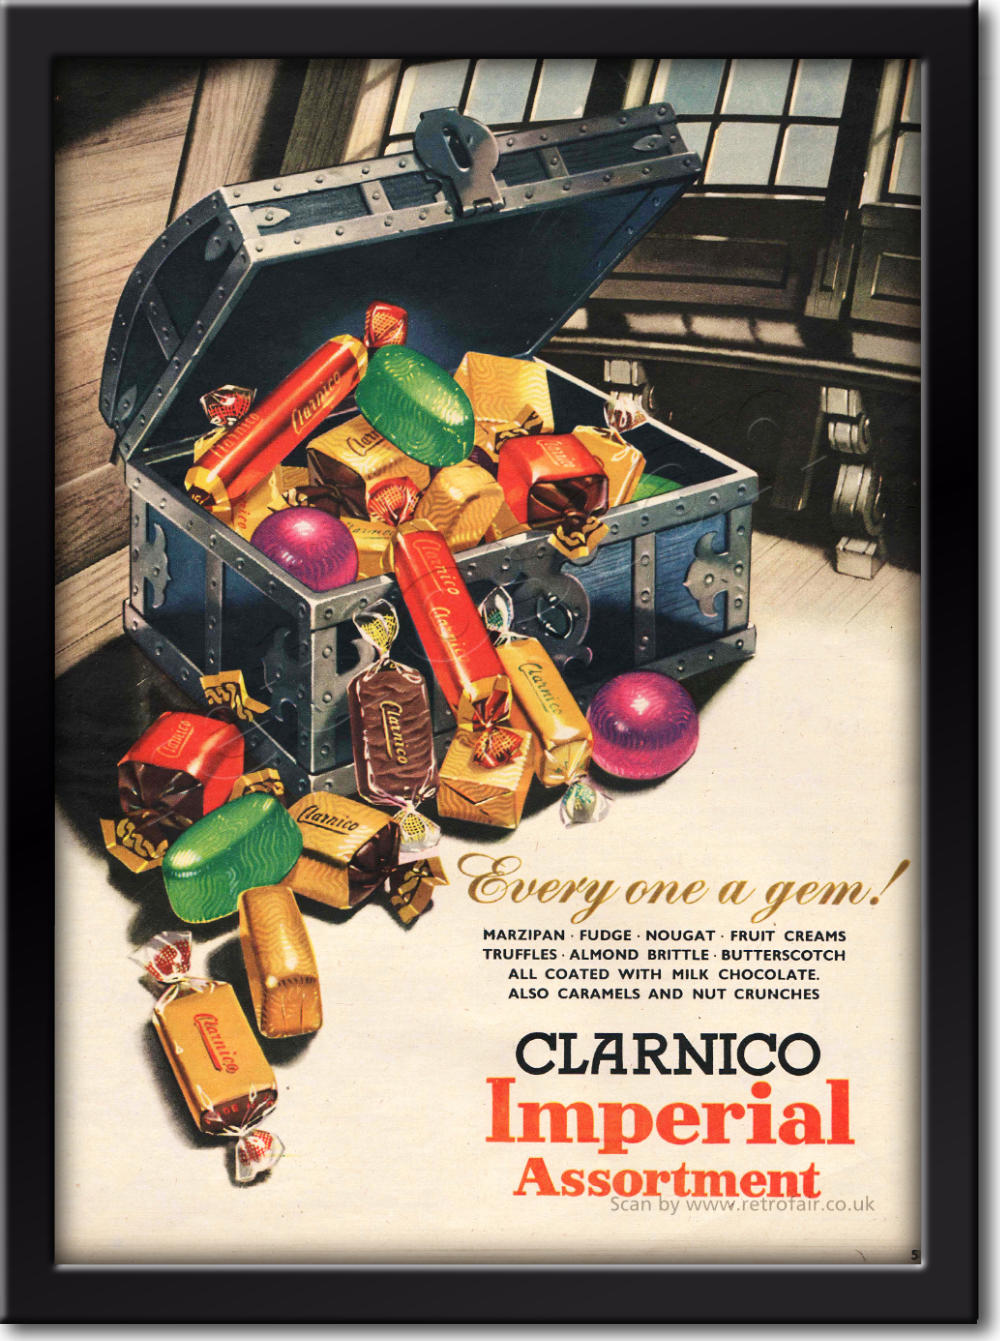 1955 retro Clarnico Imperial Assortment Treasure Chest advert